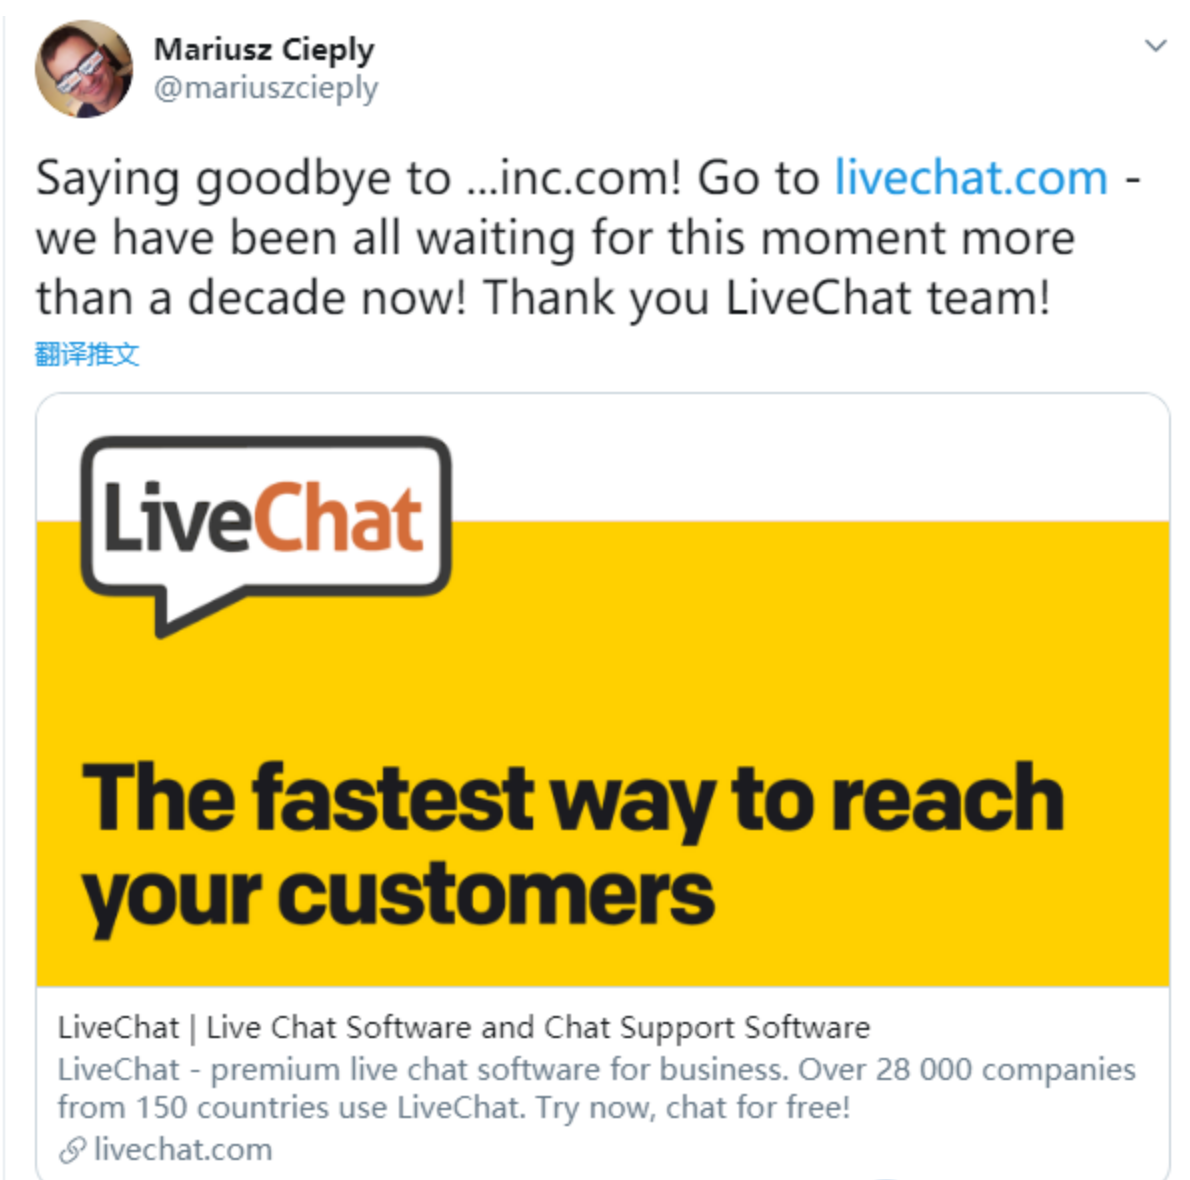  即时聊天软件Livechat收购并启用全新域名 livechat.com